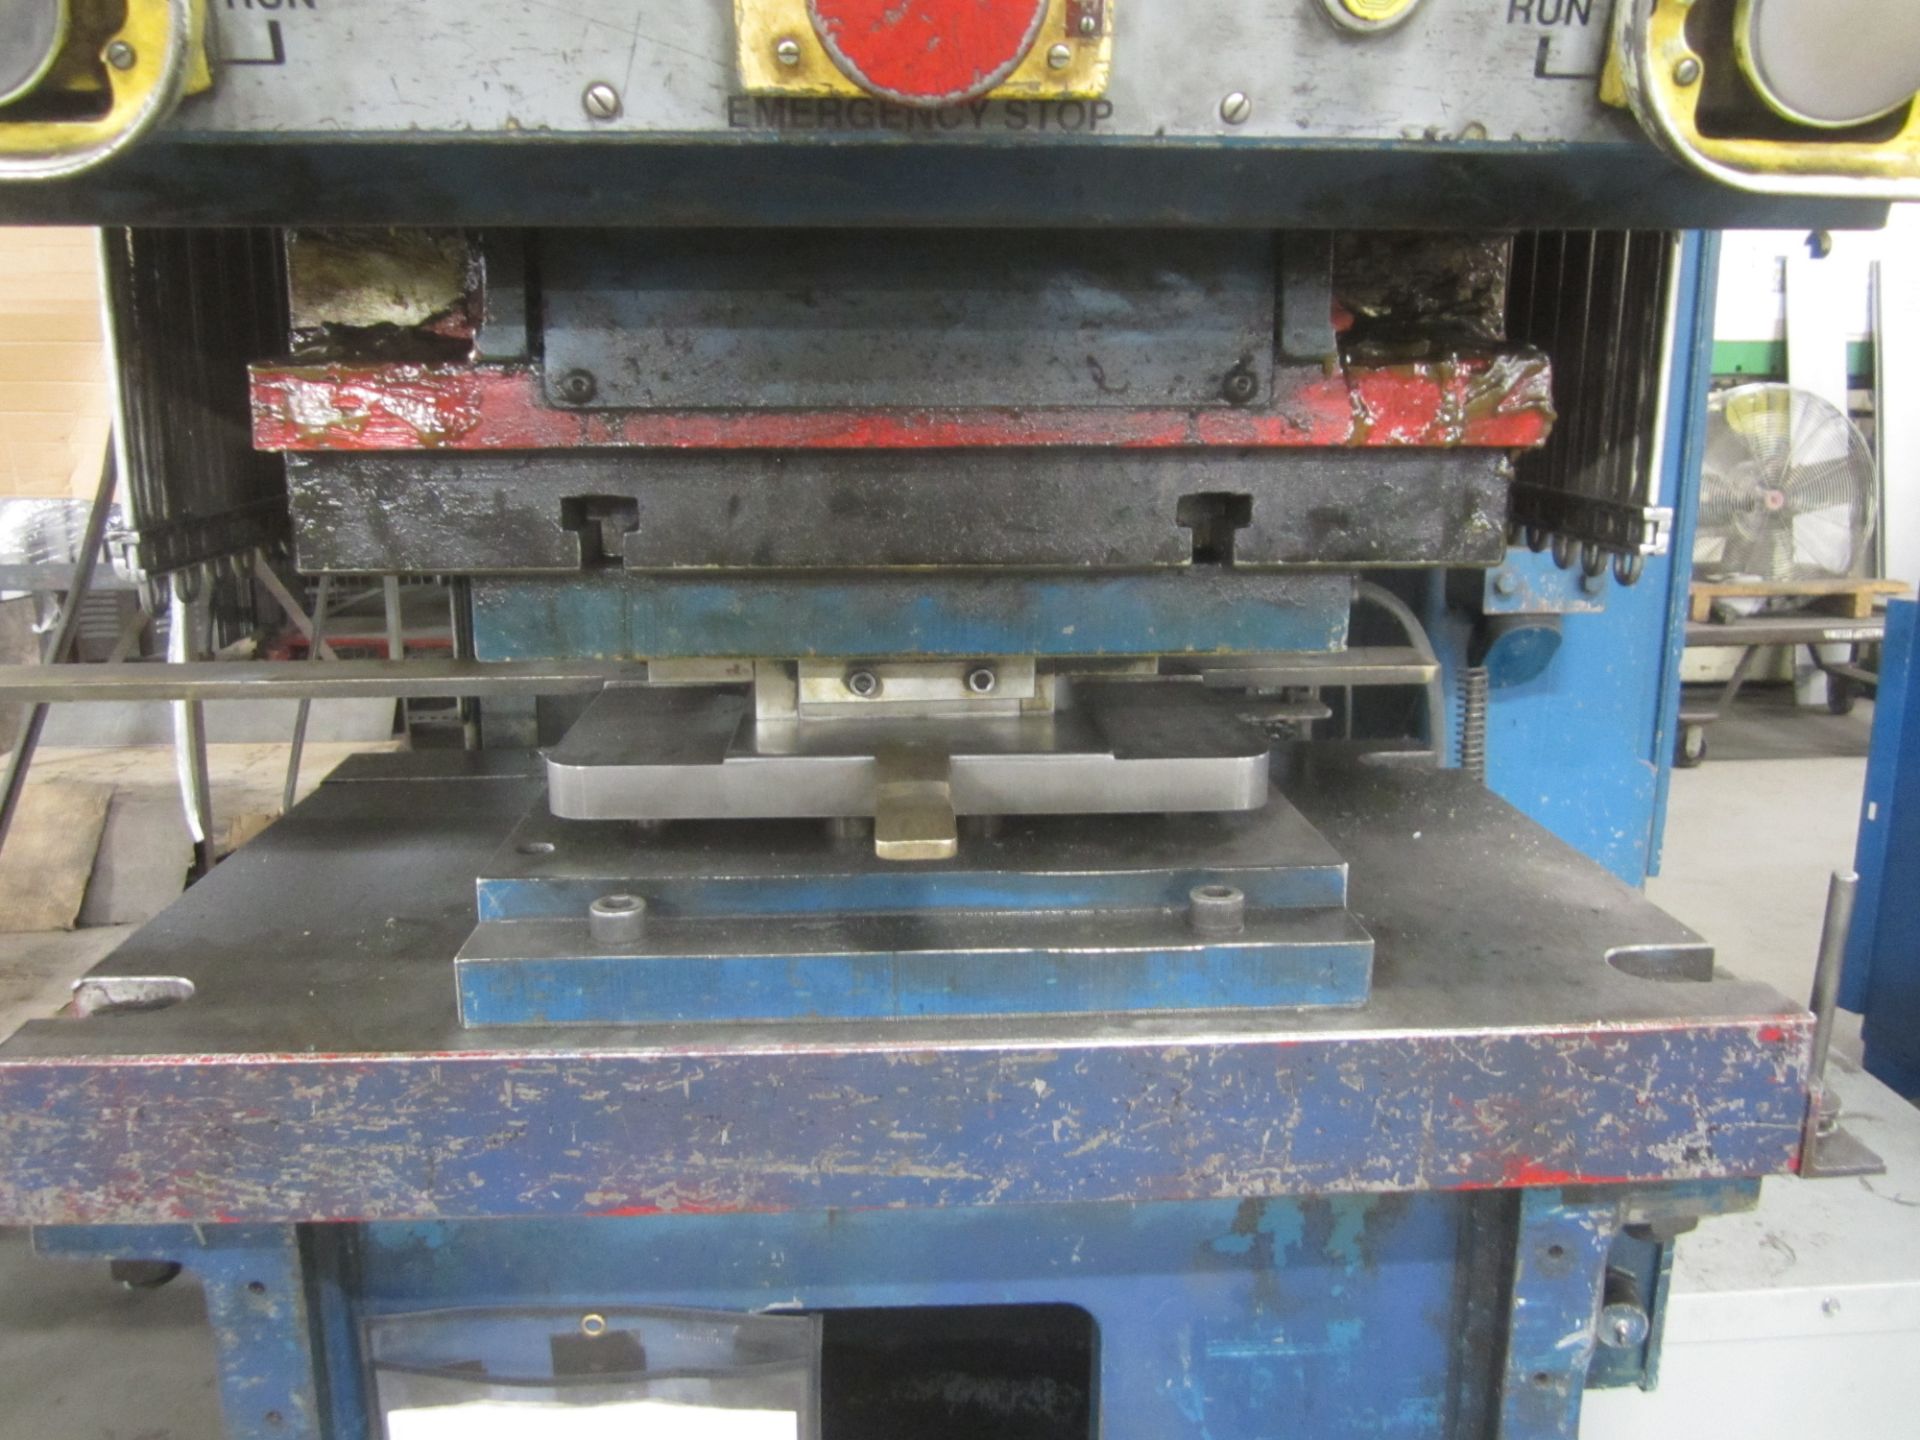 Cincinnati Model 75-OBS Hydraulic Punch Press, s/n 51814, 75 Ton, 8” Stroke Max., New 2000 - Image 3 of 9